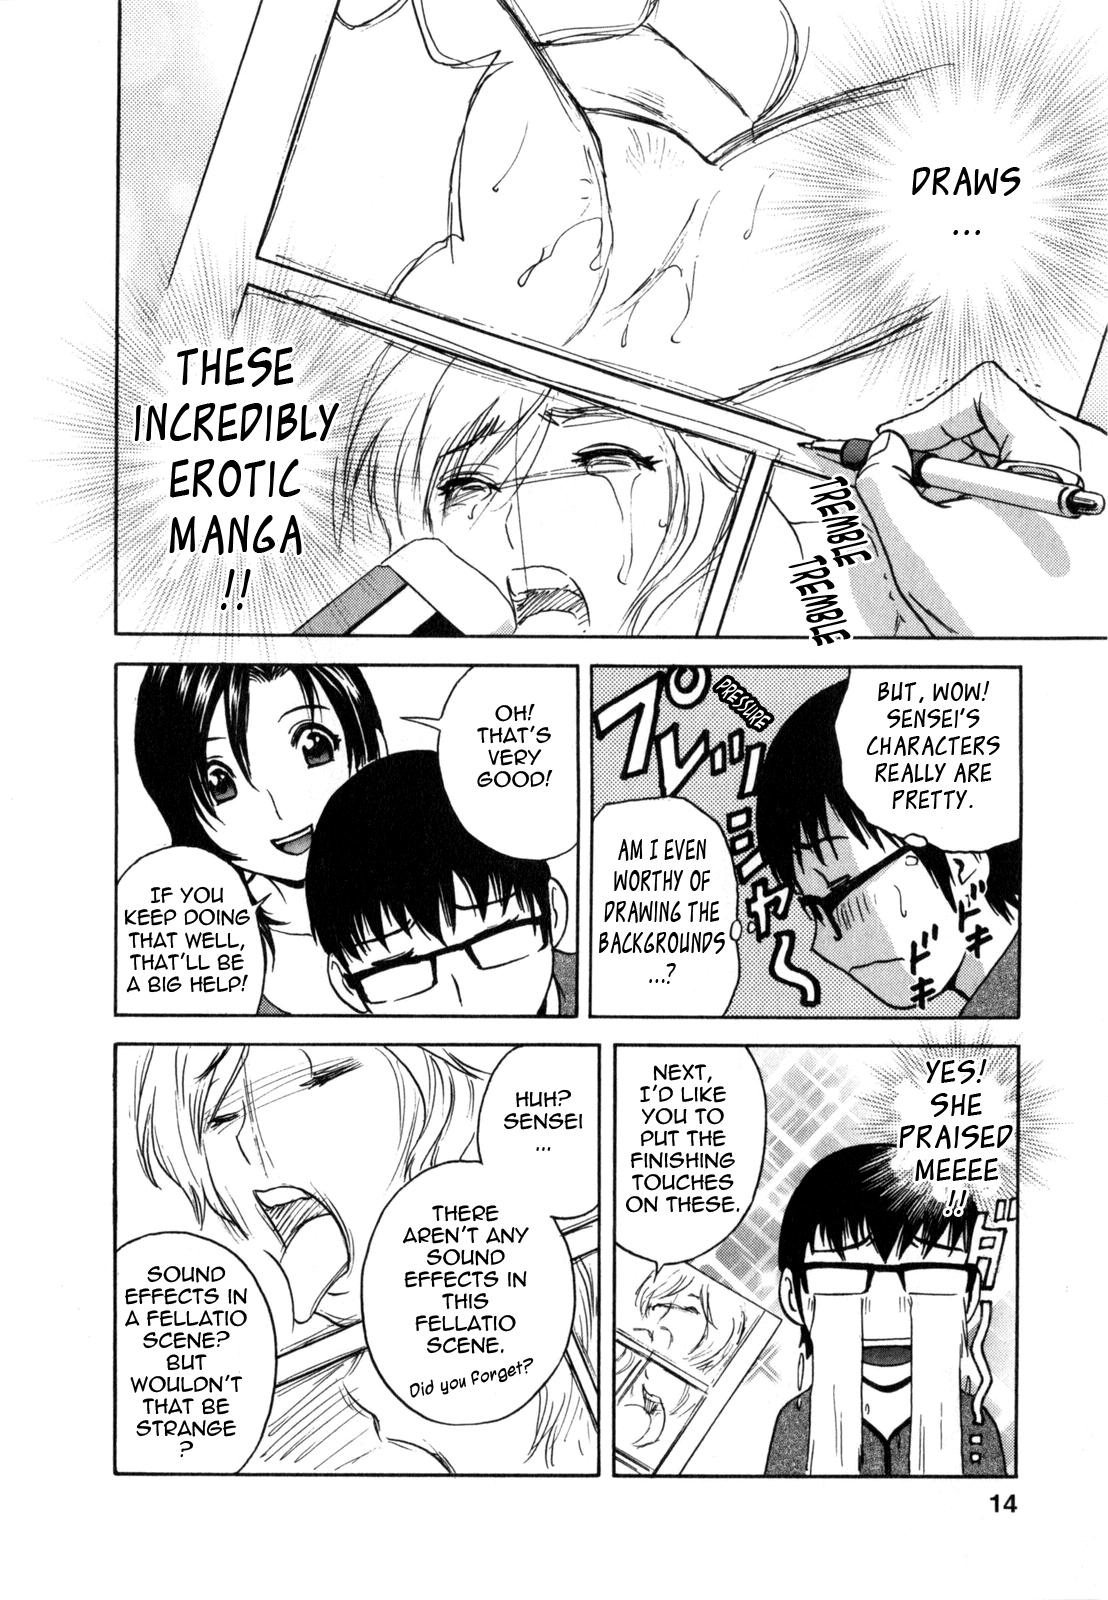 [Hidemaru] Life with Married Women Just Like a Manga 1 - Ch. 1-7 [English] {Tadanohito} 14